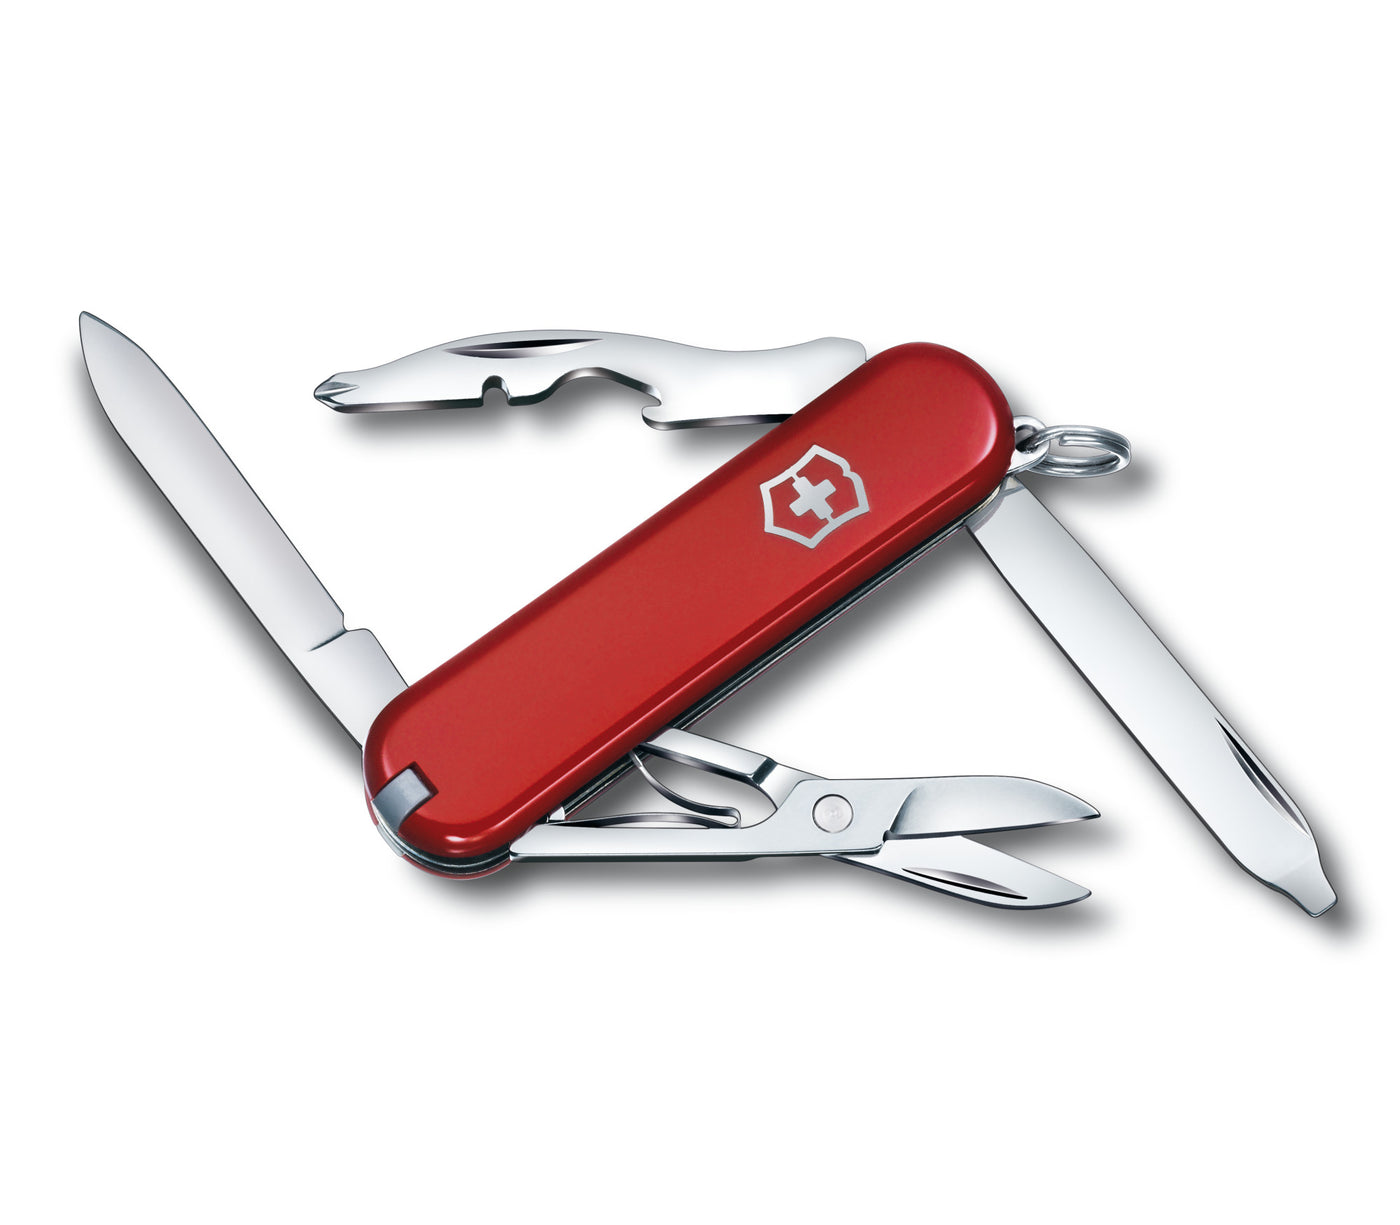 Victorinox Rambler Knife | Swiss Army Knife | Outdoor Gear | NZ